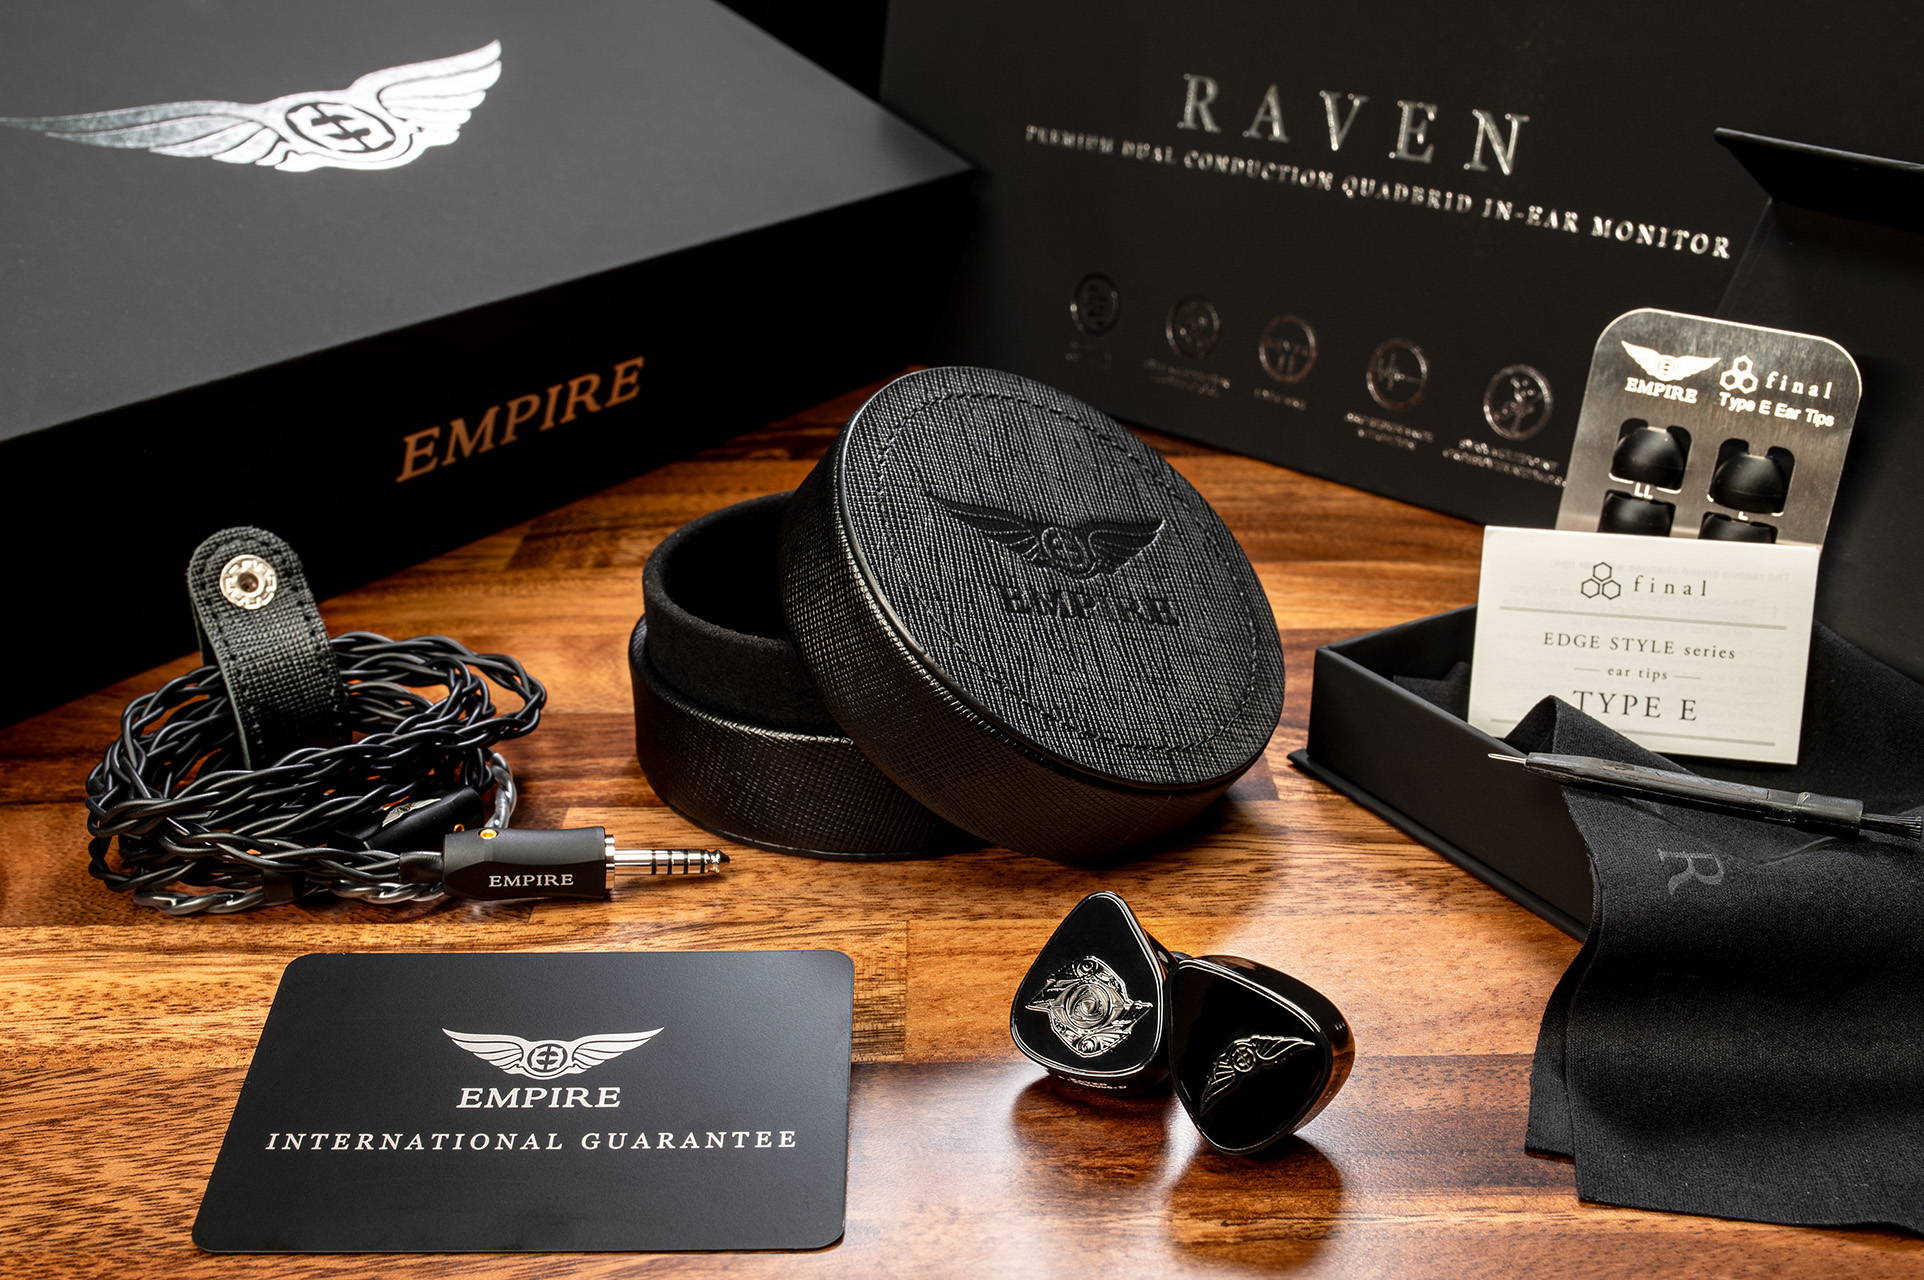 Empire Ears RAVEN IEM box contents